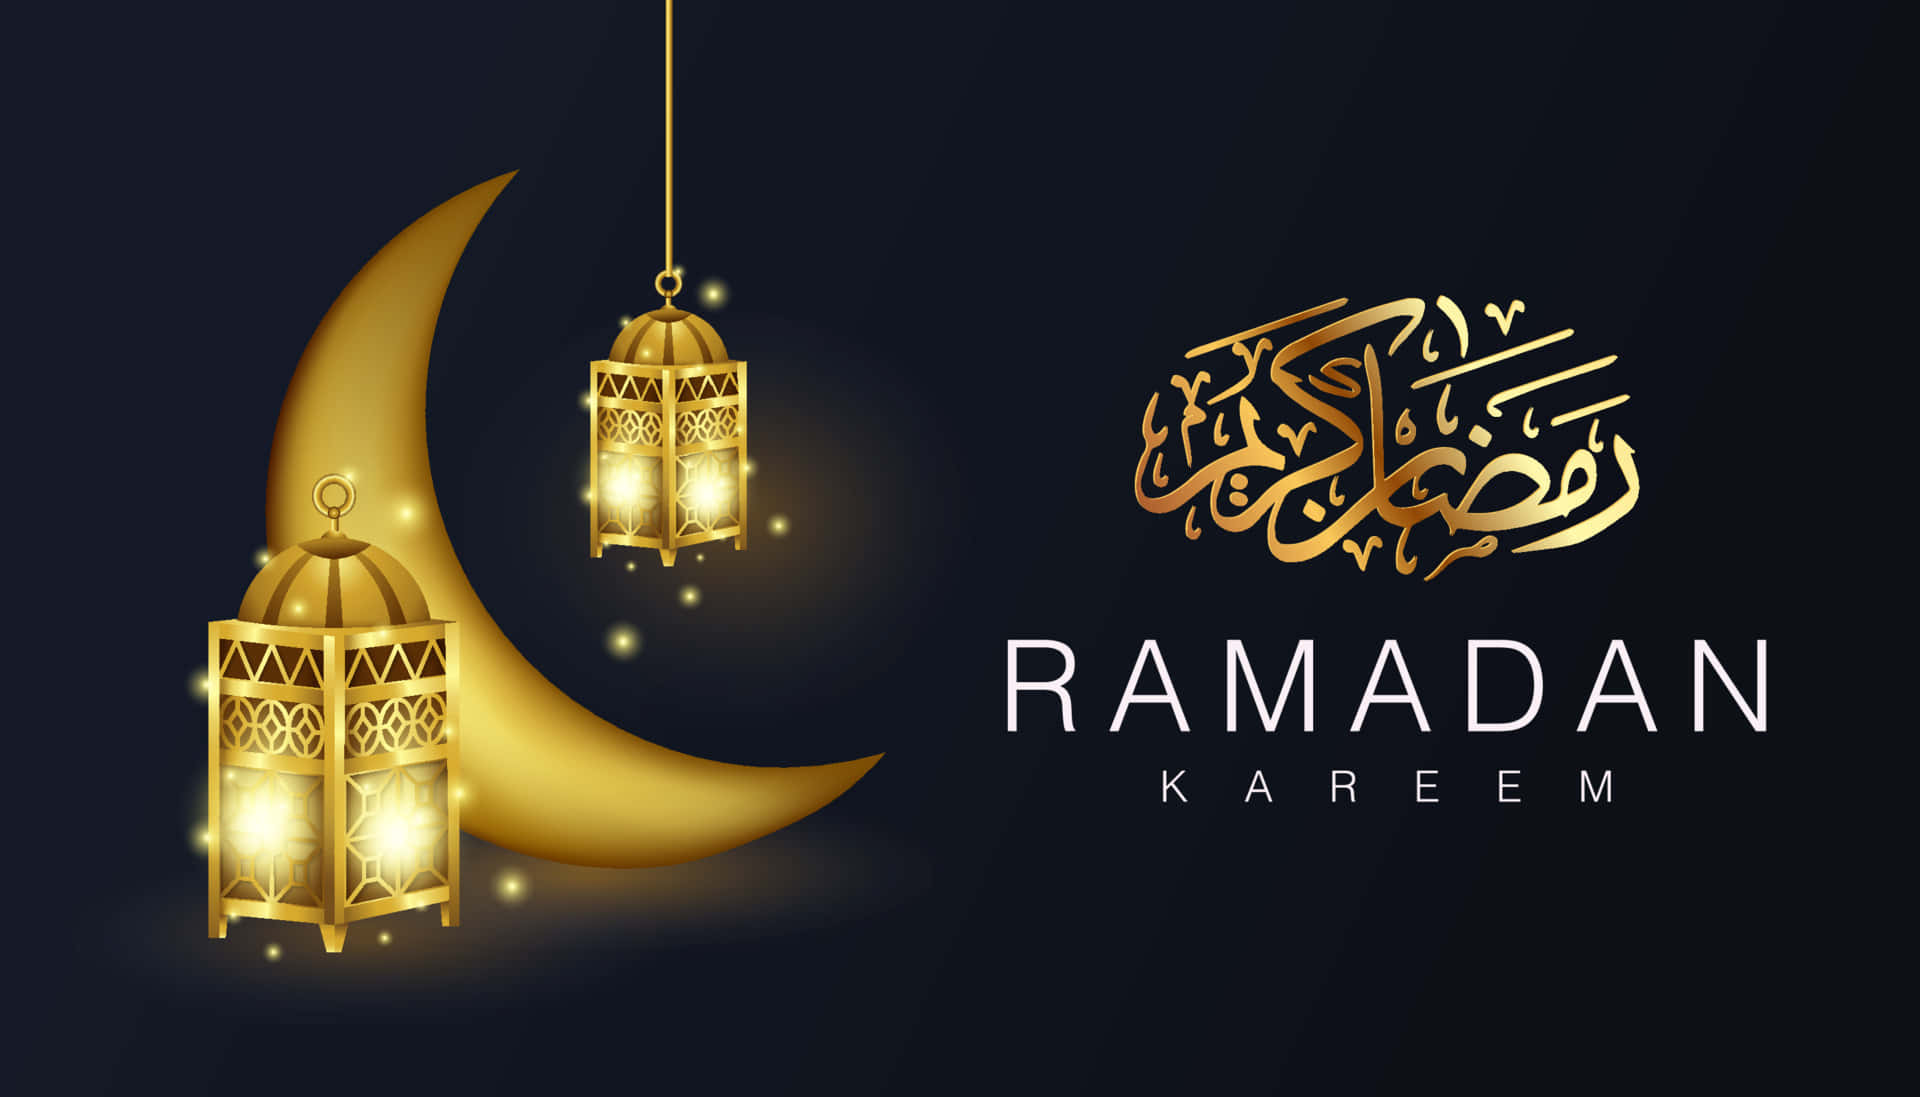 Ramadankareem! - Ramadan Kareem!